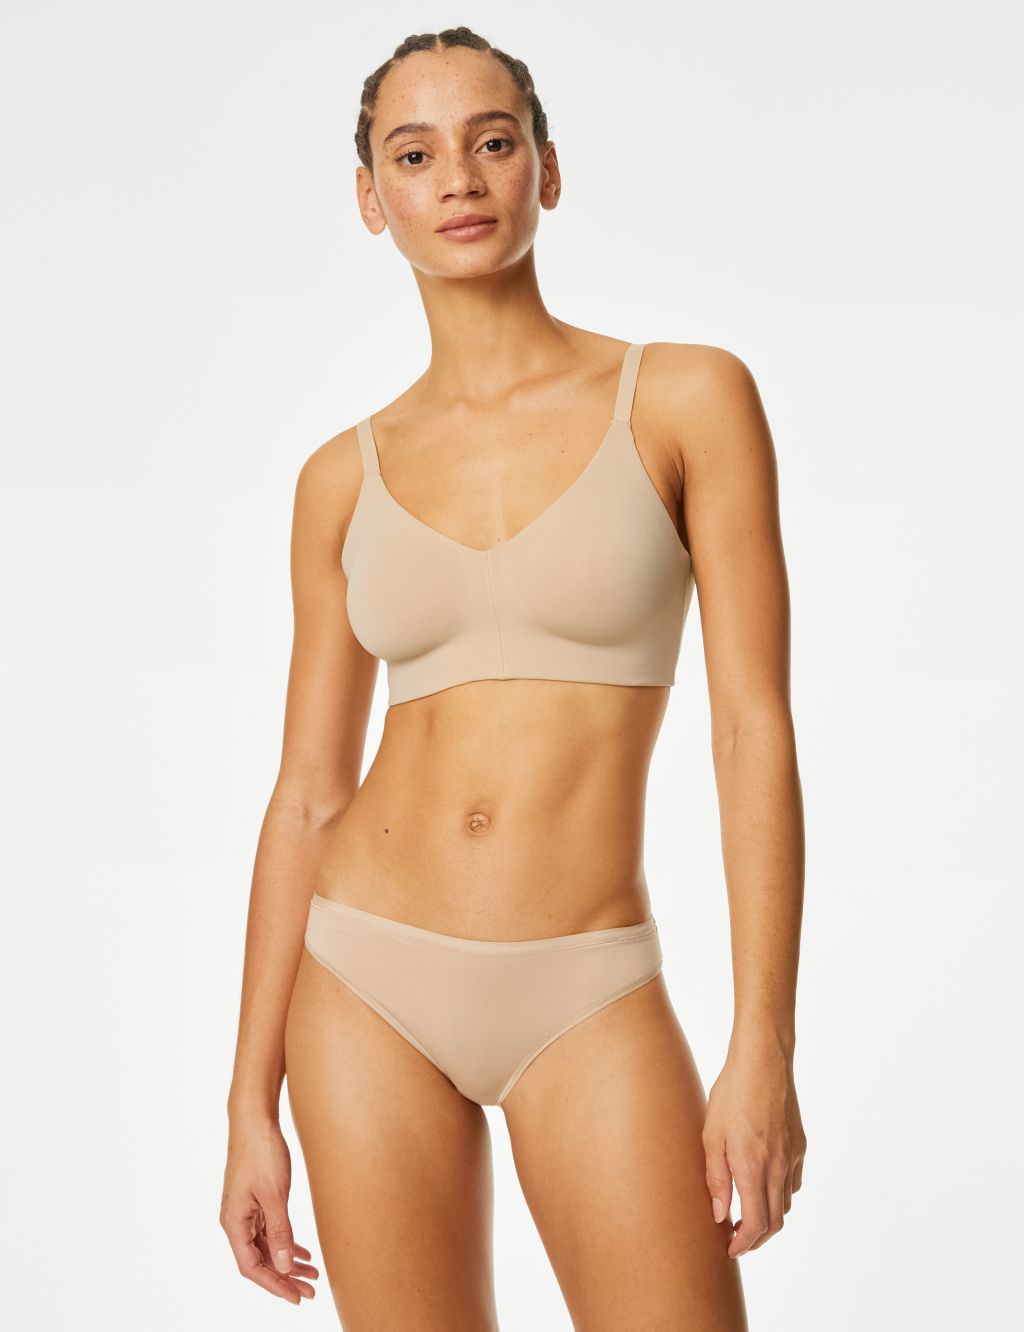 M&S Women's 5 Pack Microfibre Low Rise Bikini Knickers, Size 14, Black -  HelloSupermarket